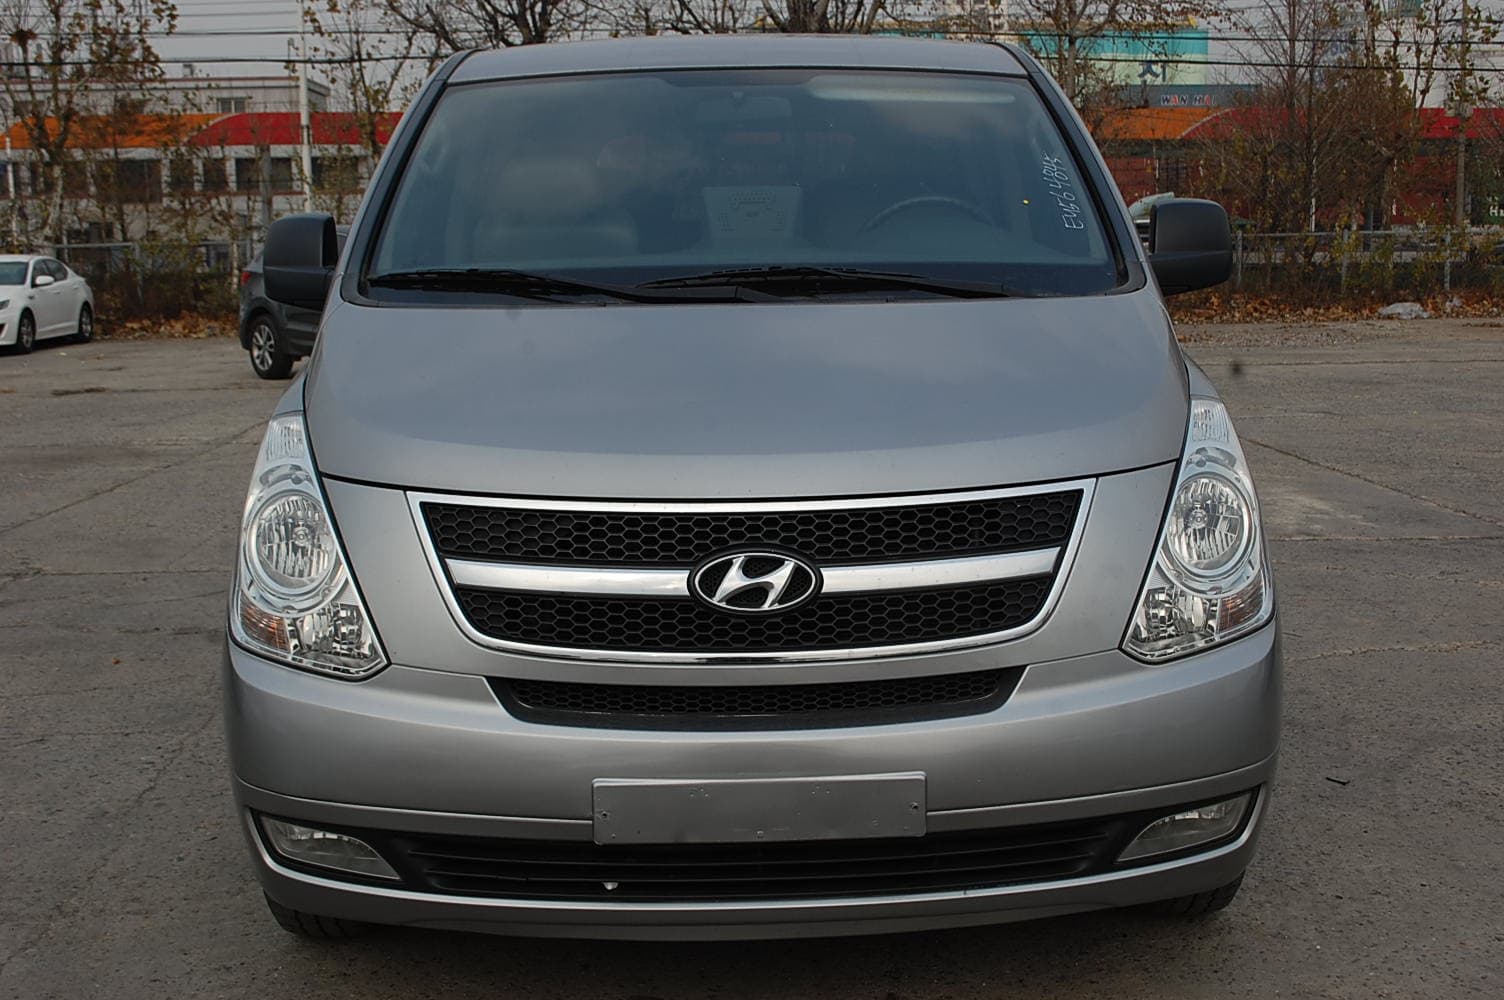 Hyundai H1 / Starex Sales Figures